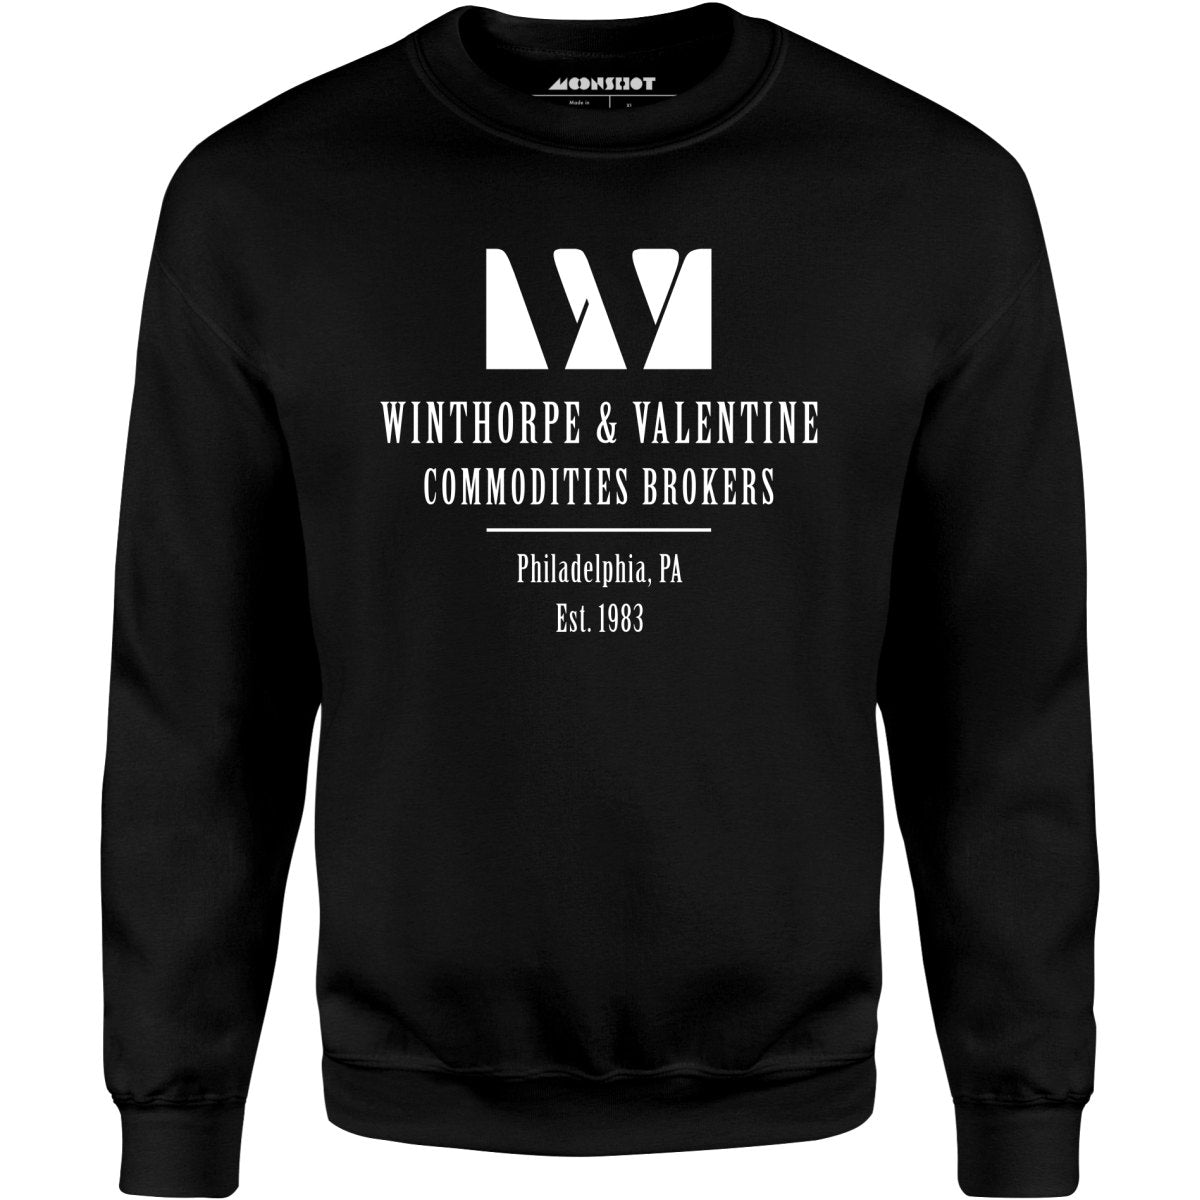 Winthorpe & Valentine Commodities Brokers - Unisex Sweatshirt